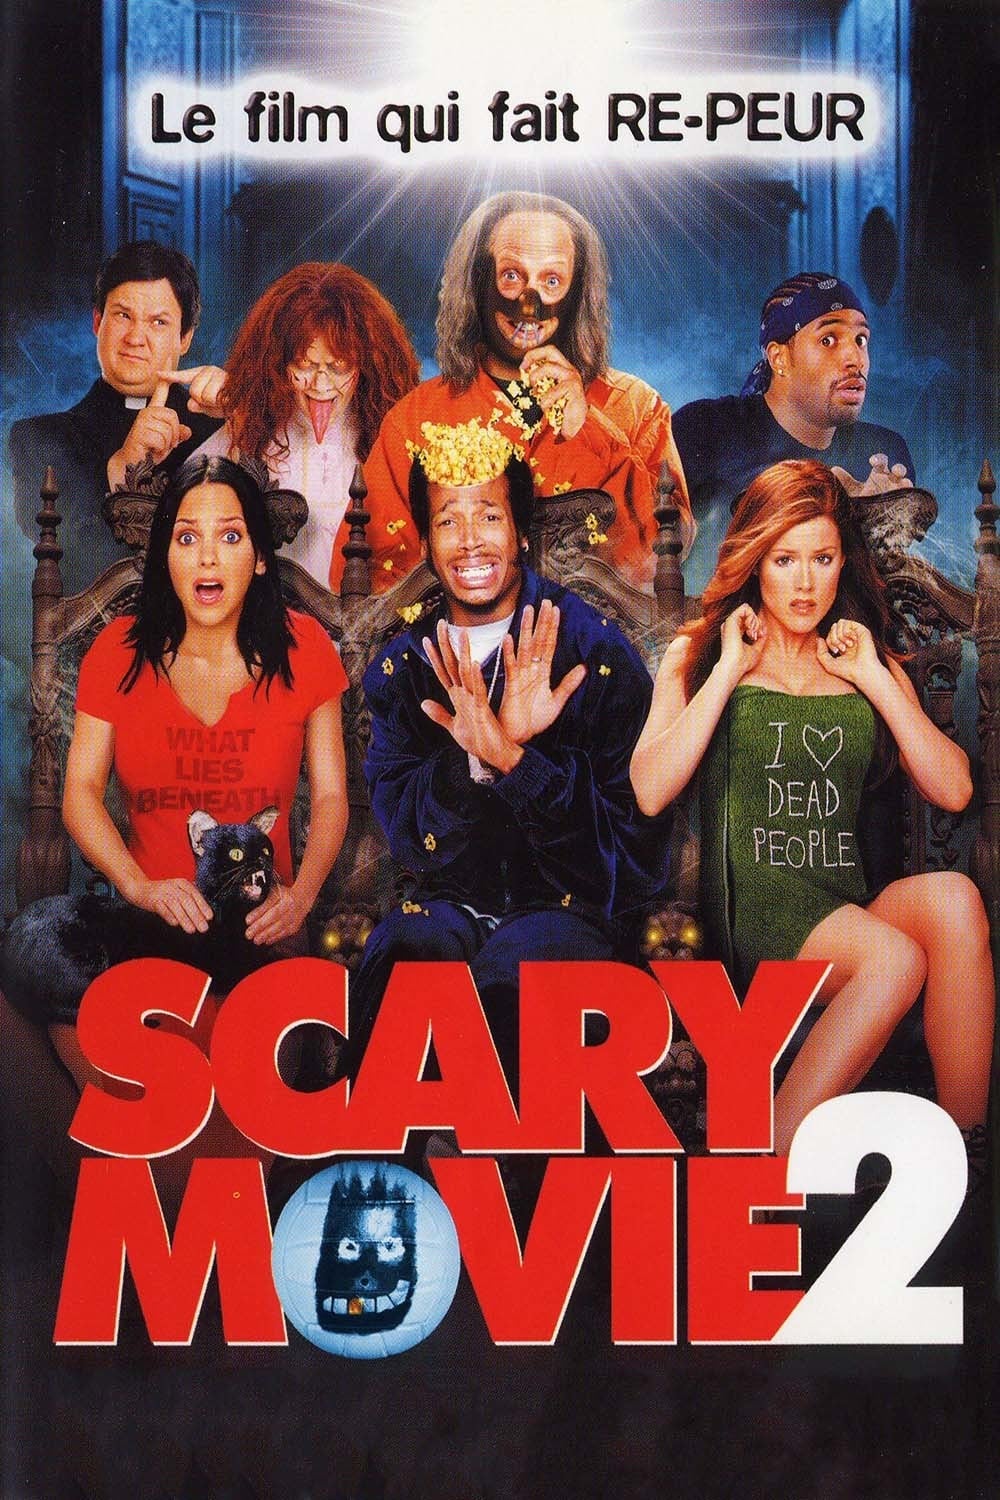 Affiche du film Scary Movie 2